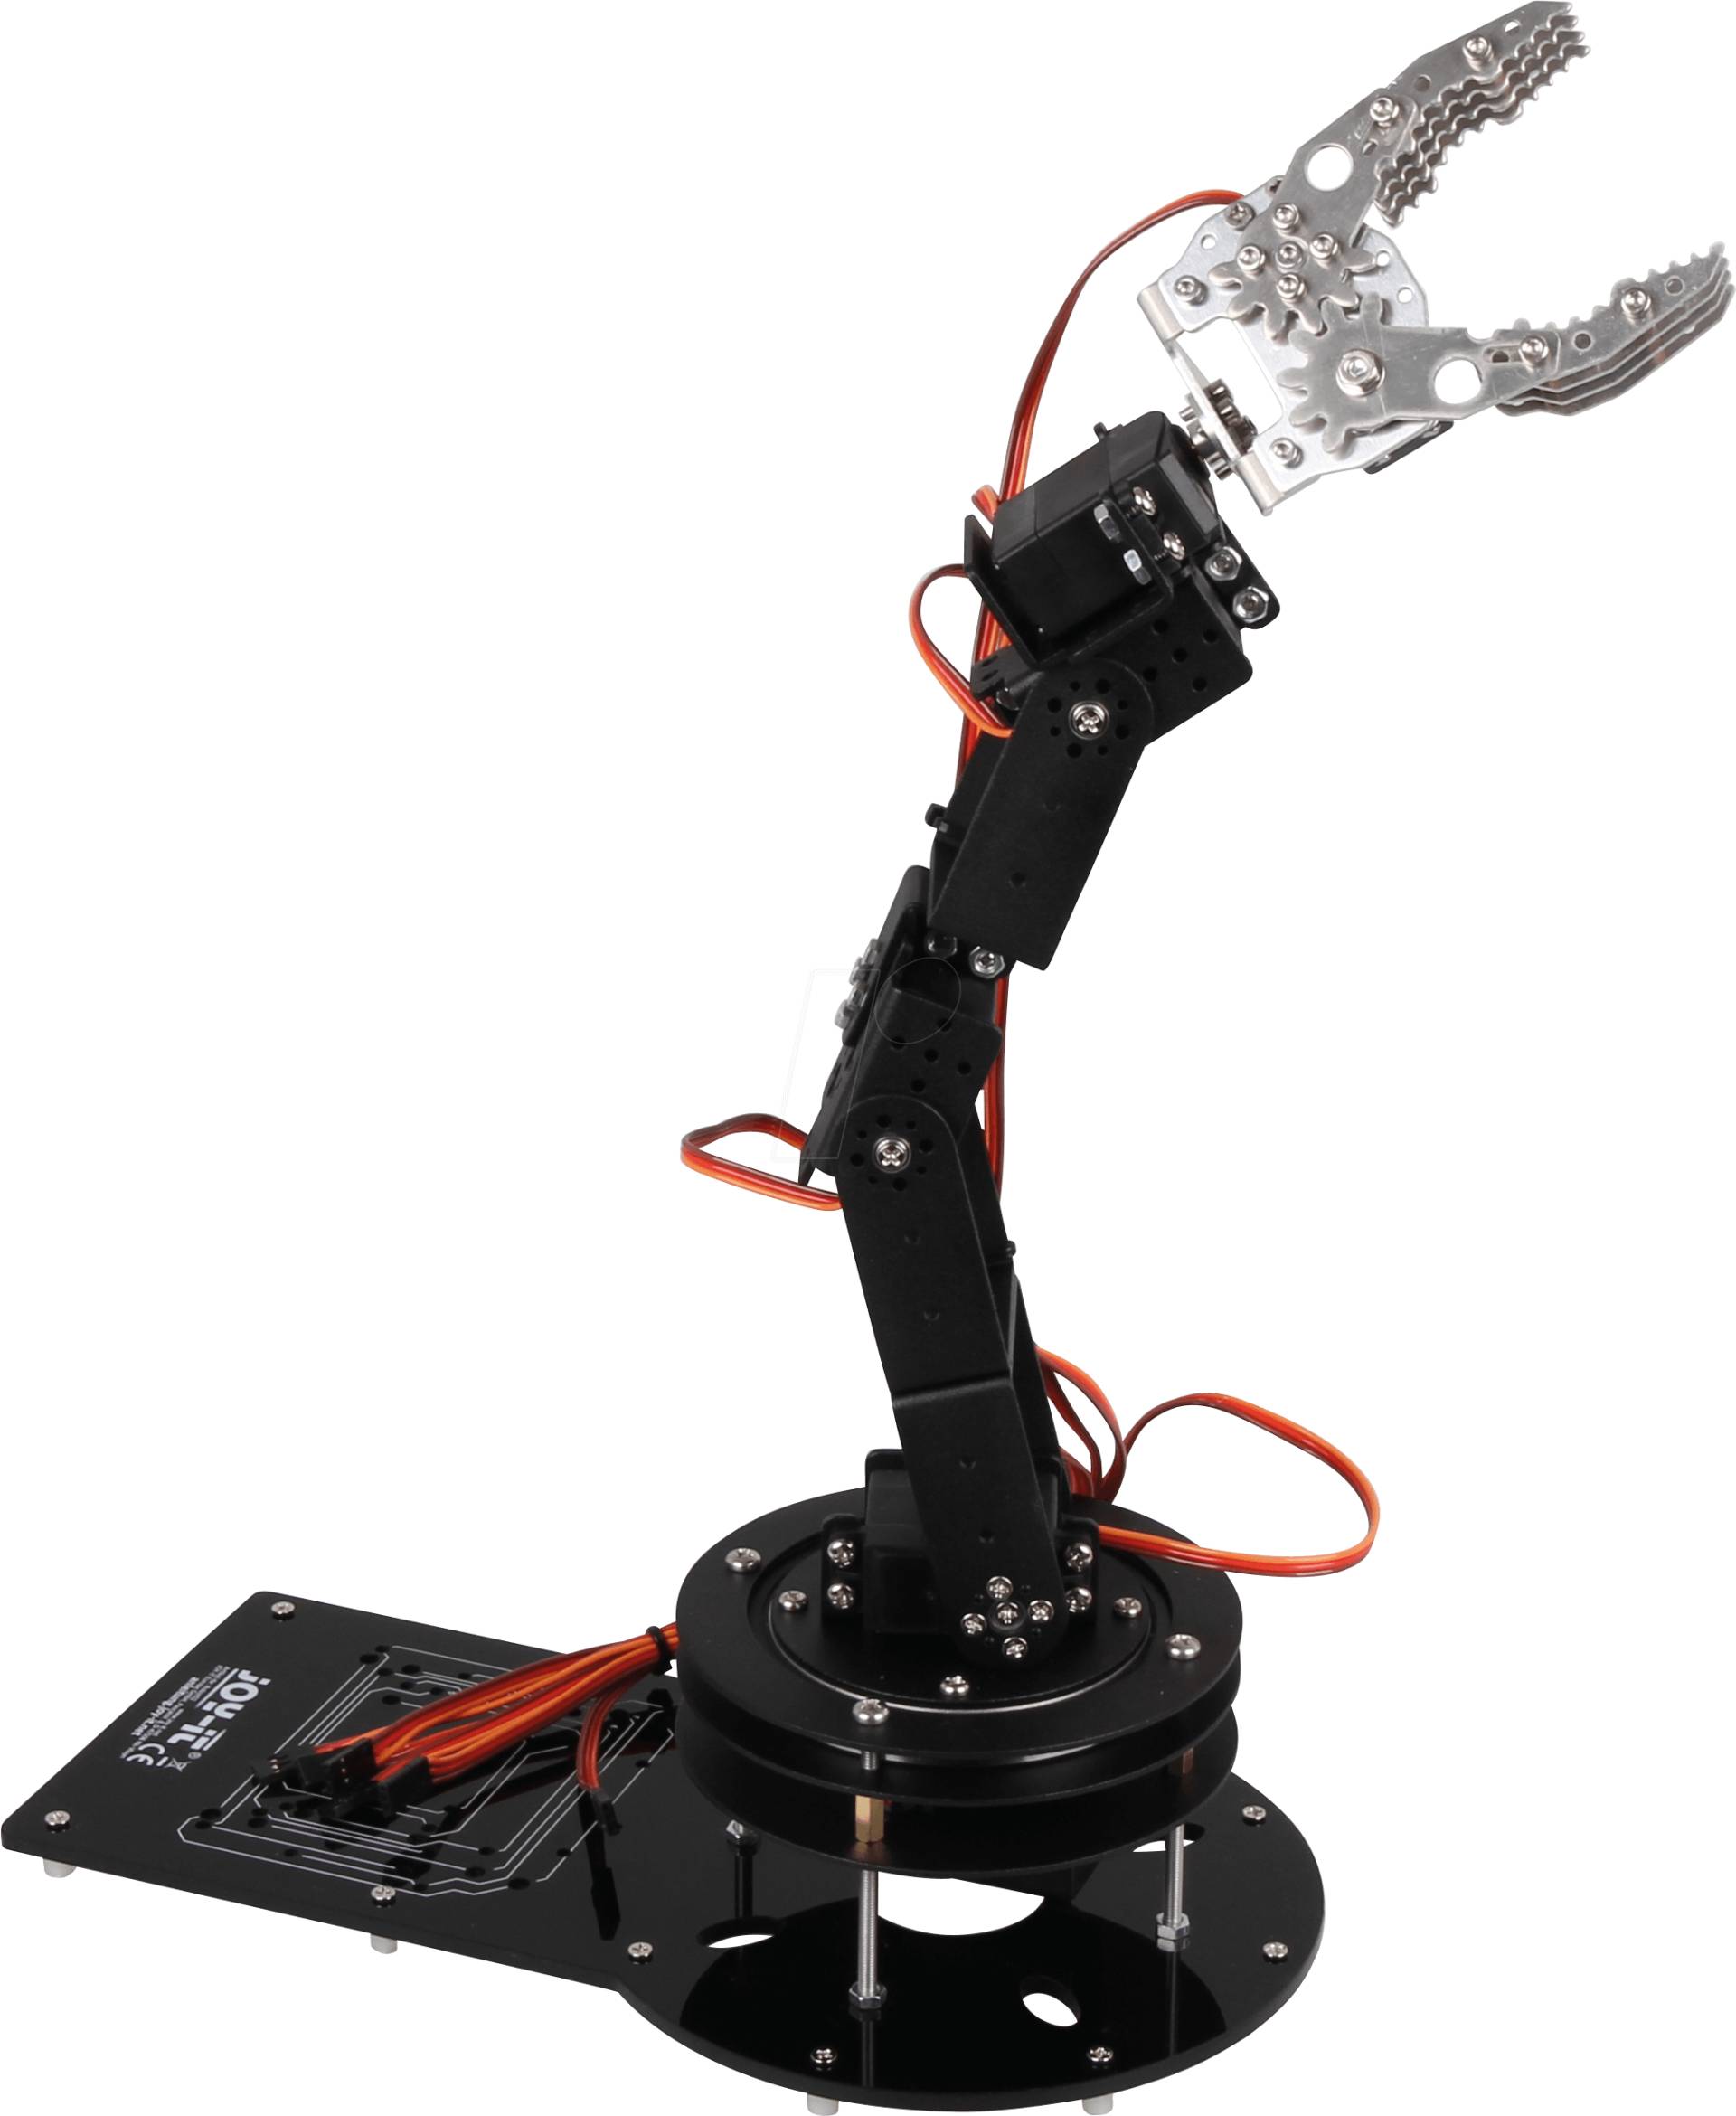 GRABIT ROBOT-ARM - Grab-it Roboter Arm Bausatz von JOY-IT